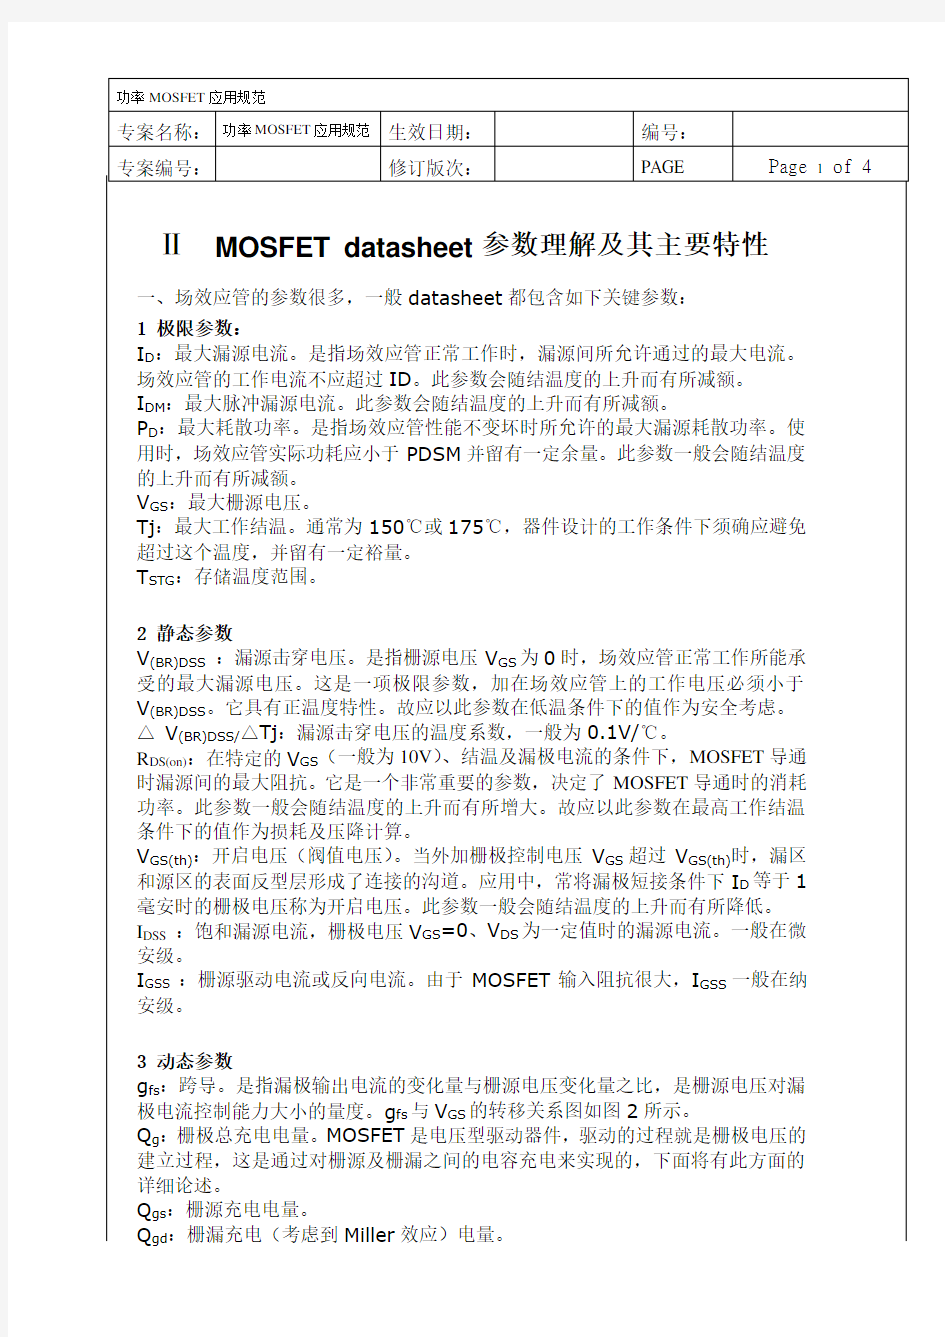 MOSFET datasheet参数理解及其主要特性